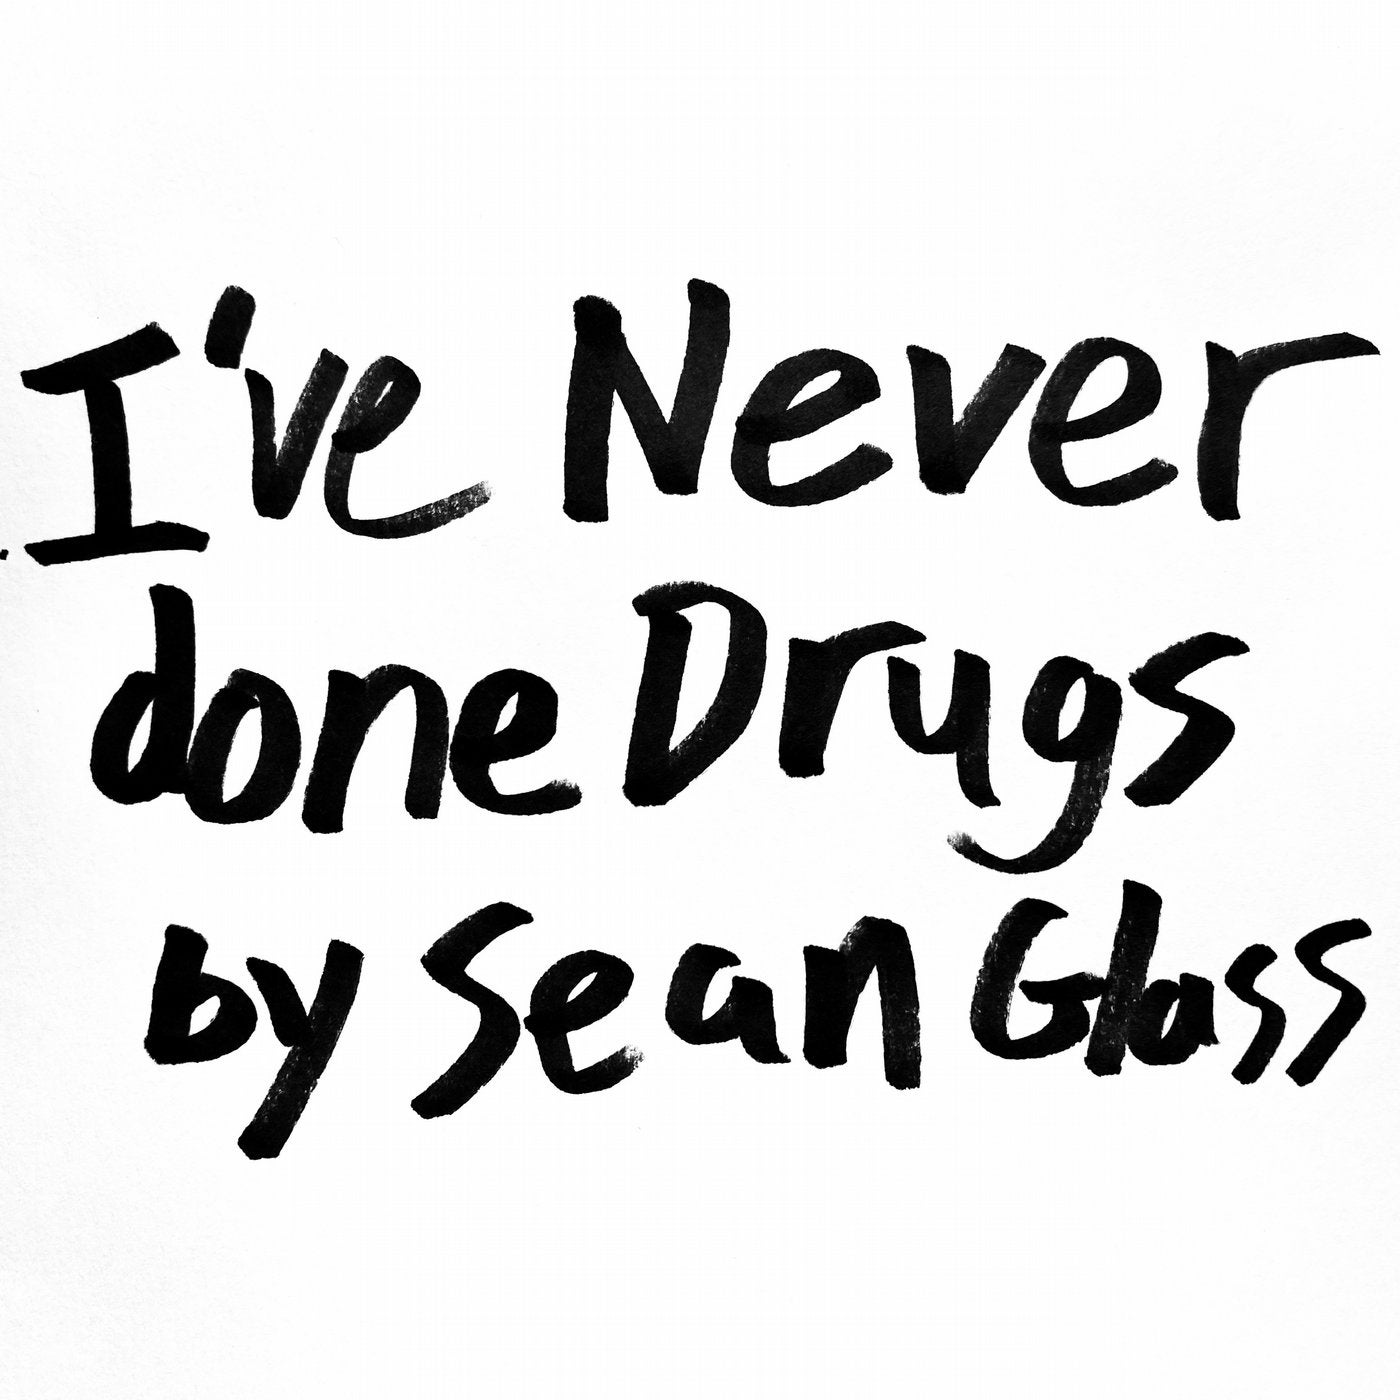 I've Never done Drugs